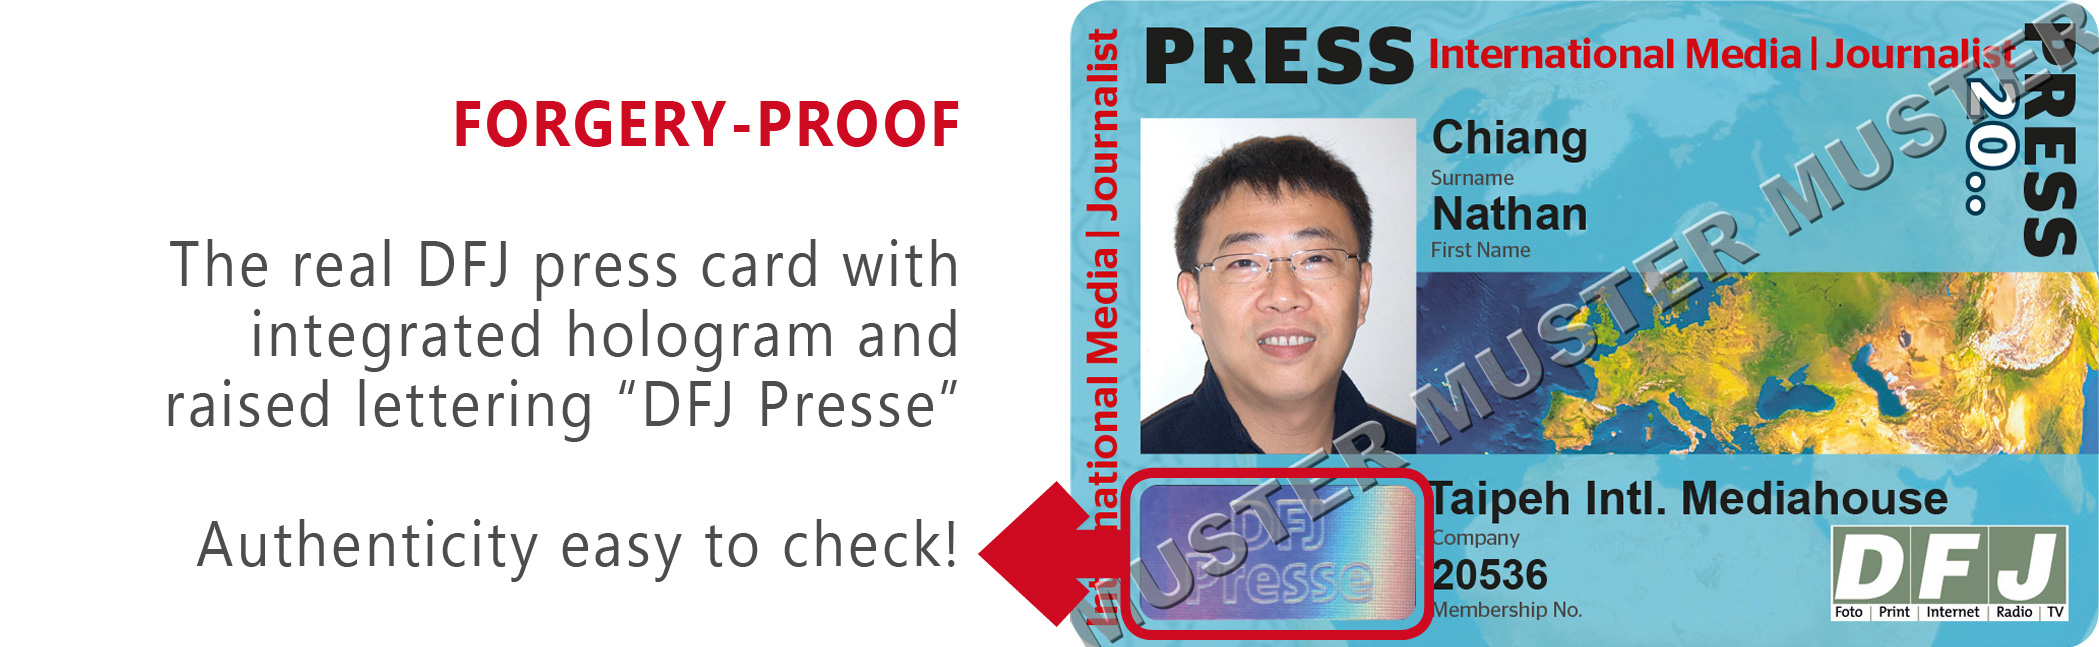 Press card international